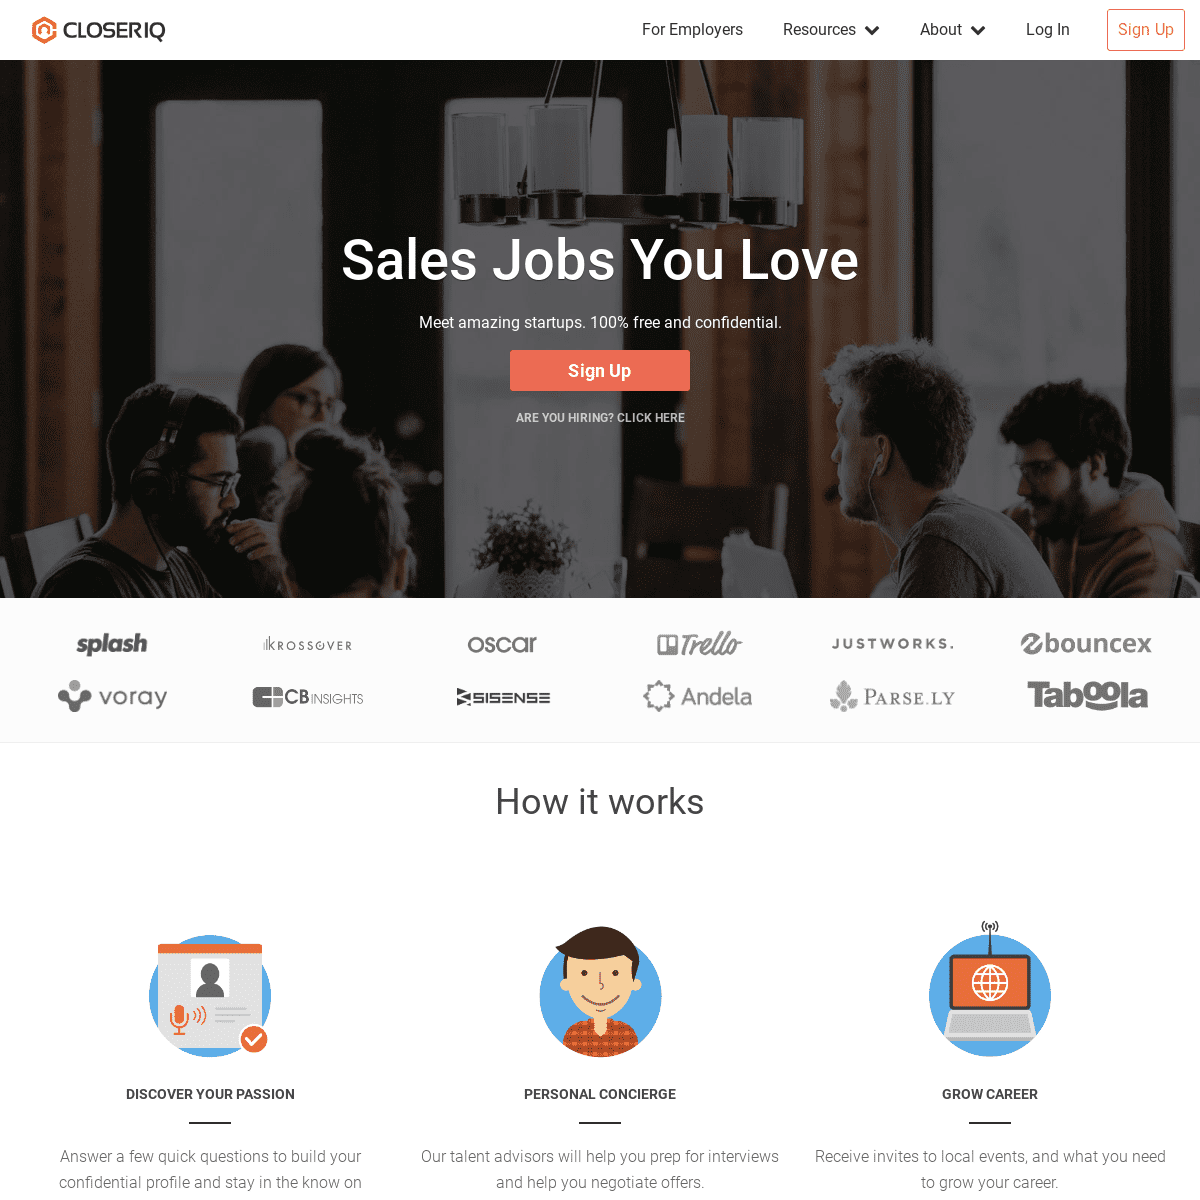 CloserIQ - Startup Sales Jobs You Love